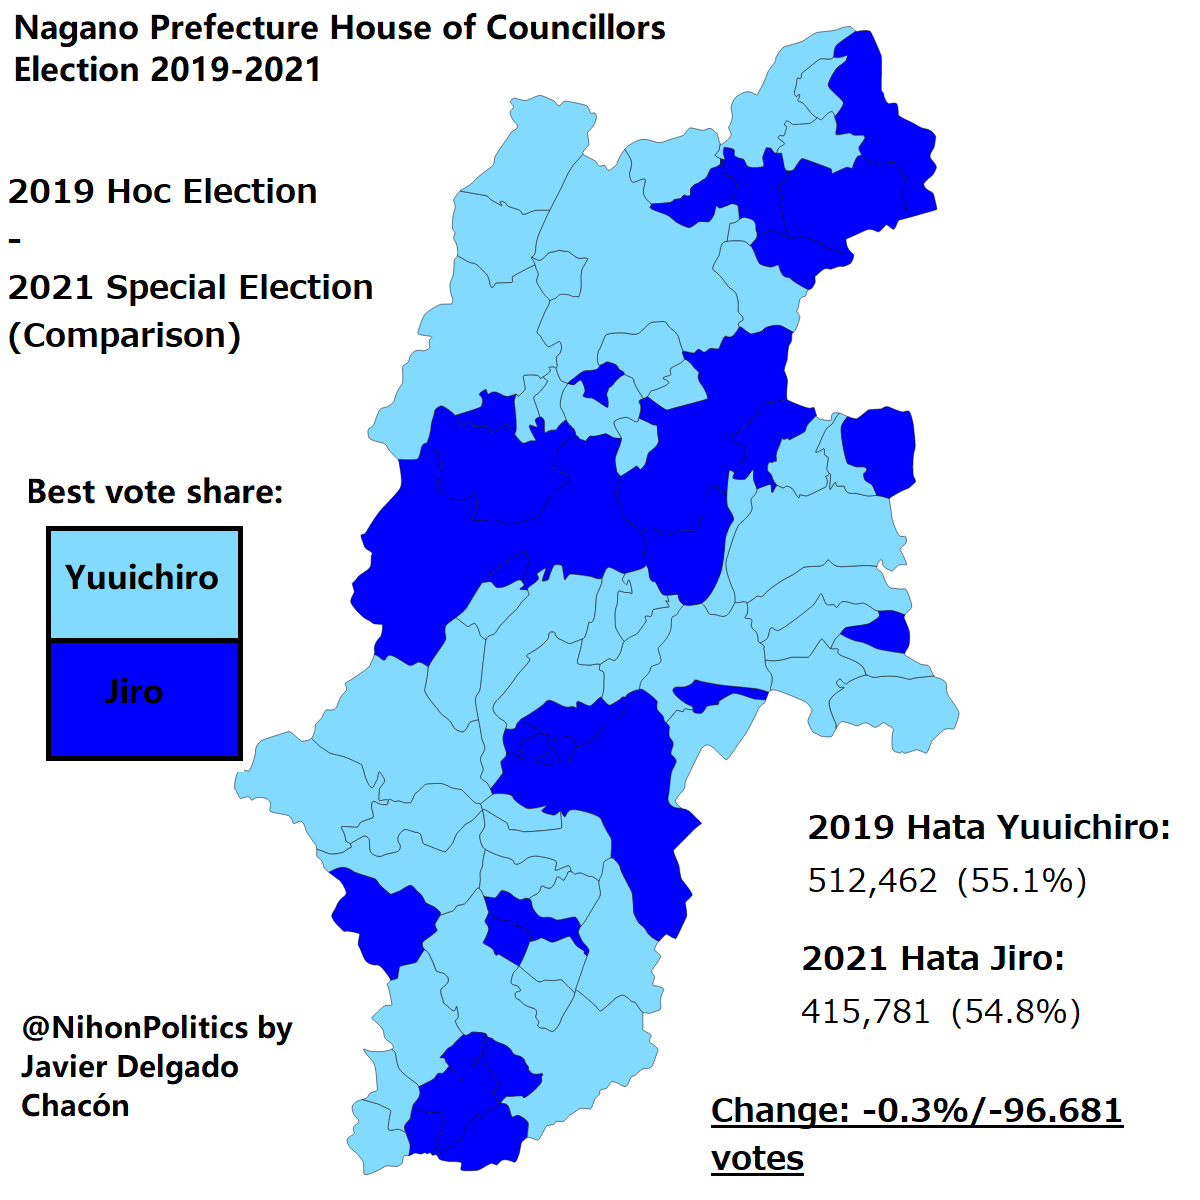 Comparison between Hata Yuuichiro 2019 results & 2021 Hata Jiro